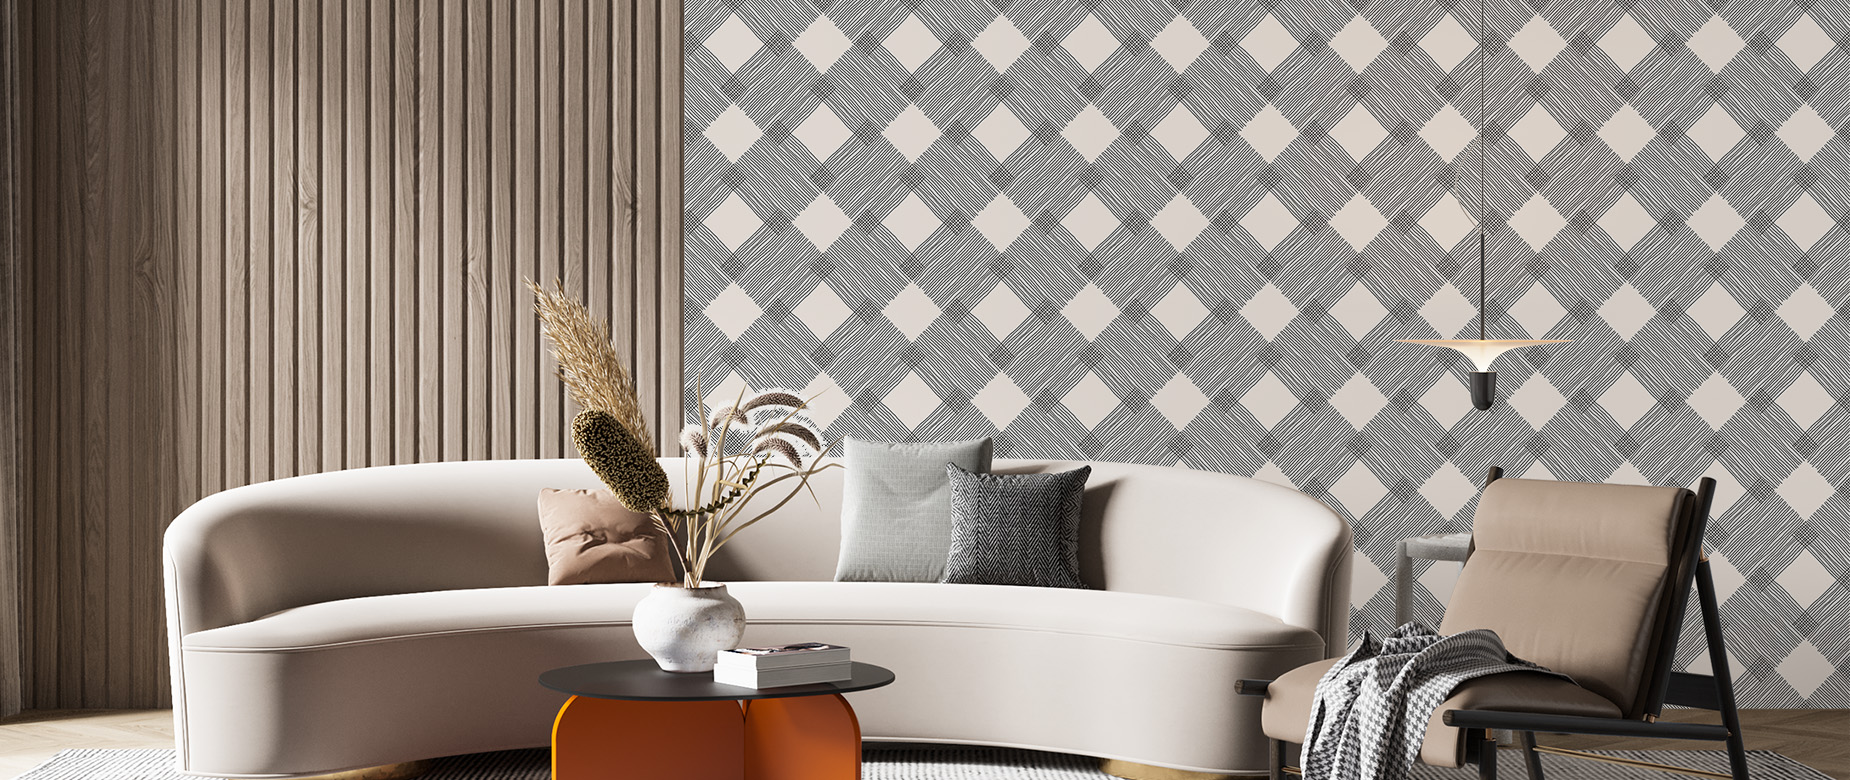 beige-square-design-Seamless design repeat pattern wallpaper-in-wide-room